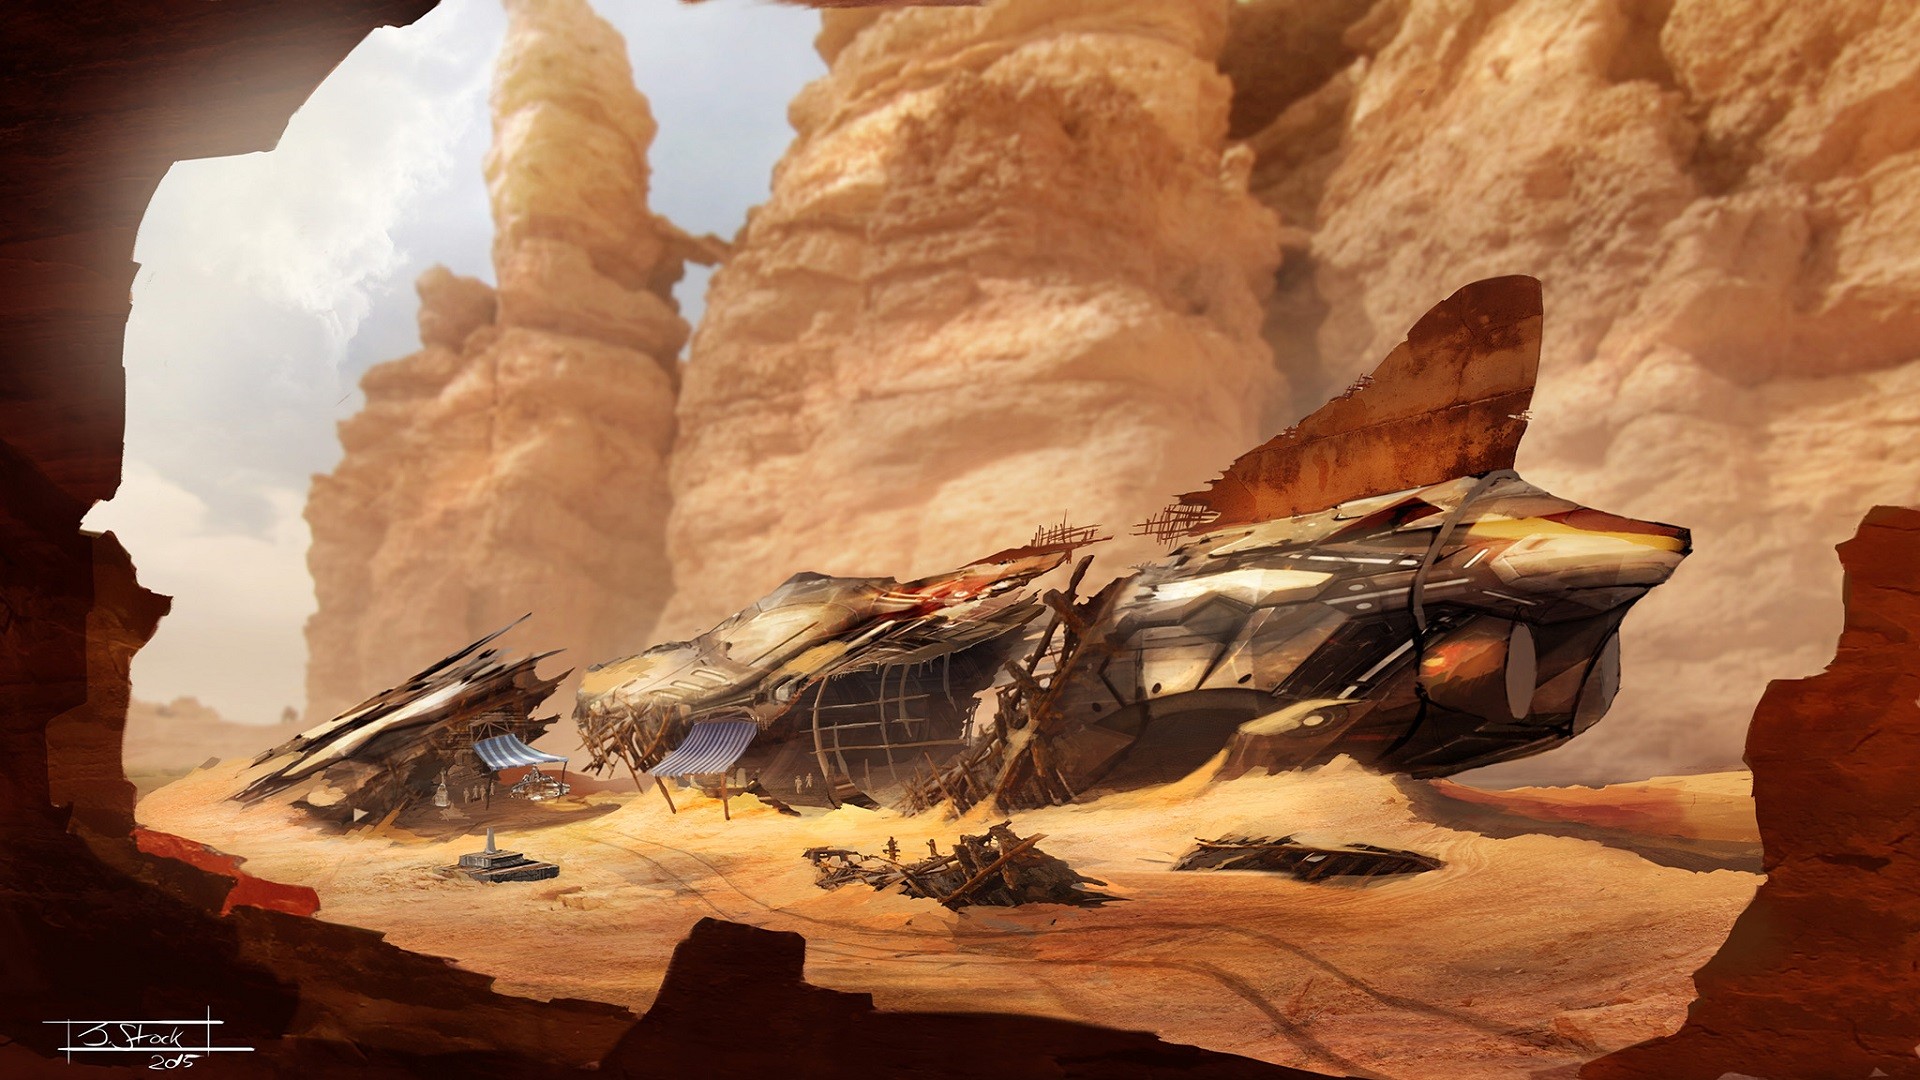 General 1920x1080 desert abandoned aircraft artwork concept art wreck spaceship 2015 (Year) science fiction rocks